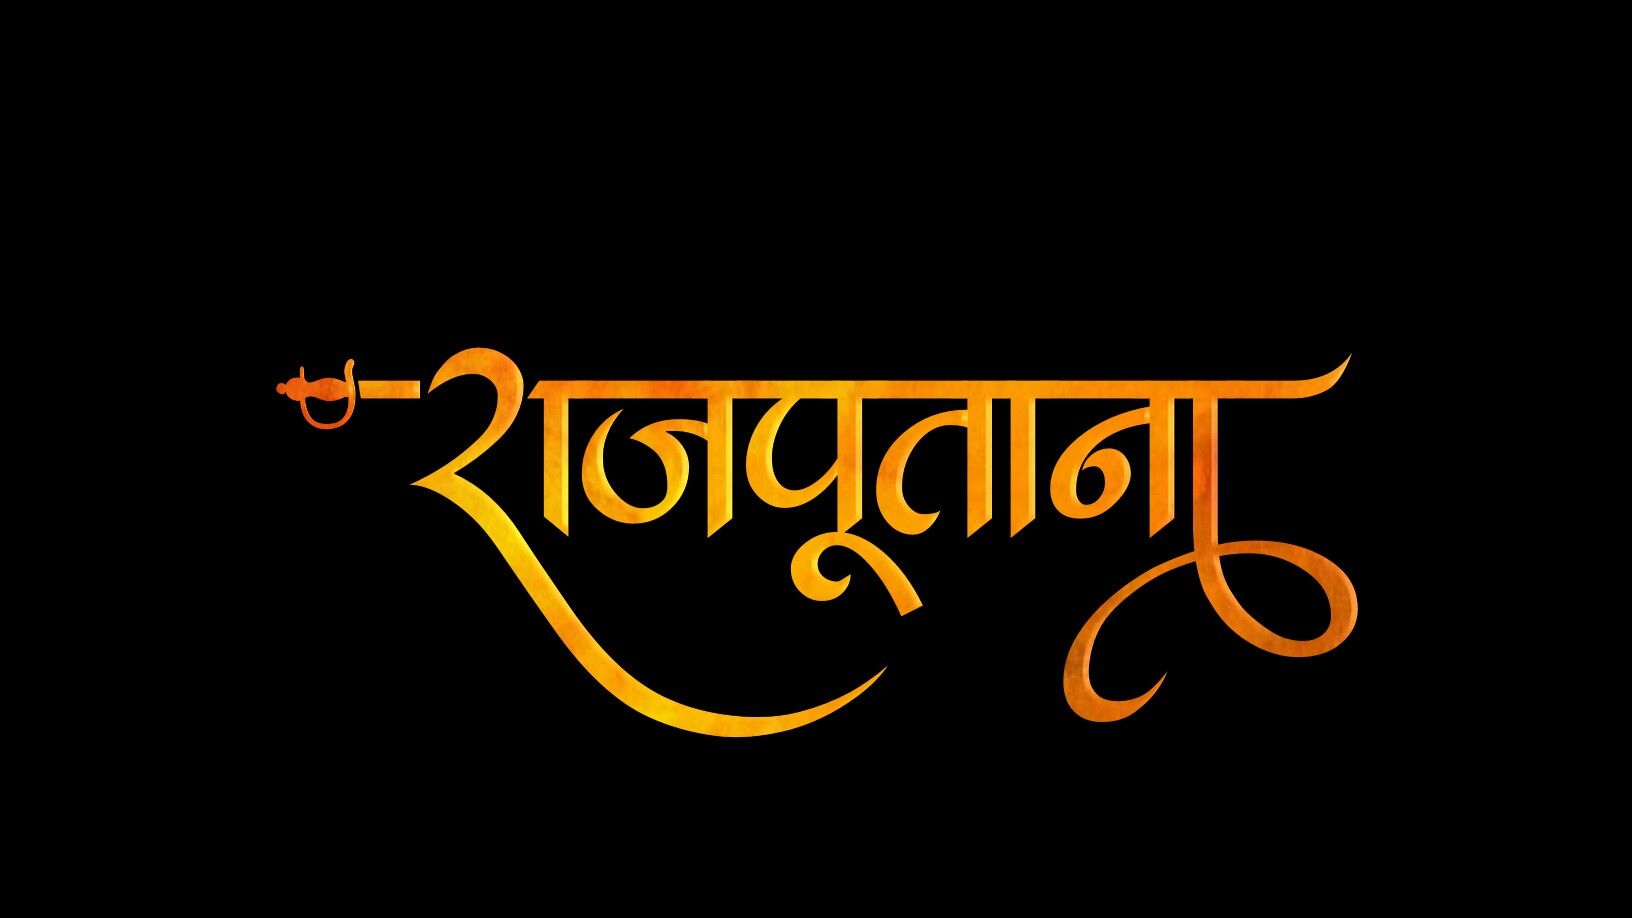 Rajputana PNG. Rajputana logo, Profile picture image, Image quotes